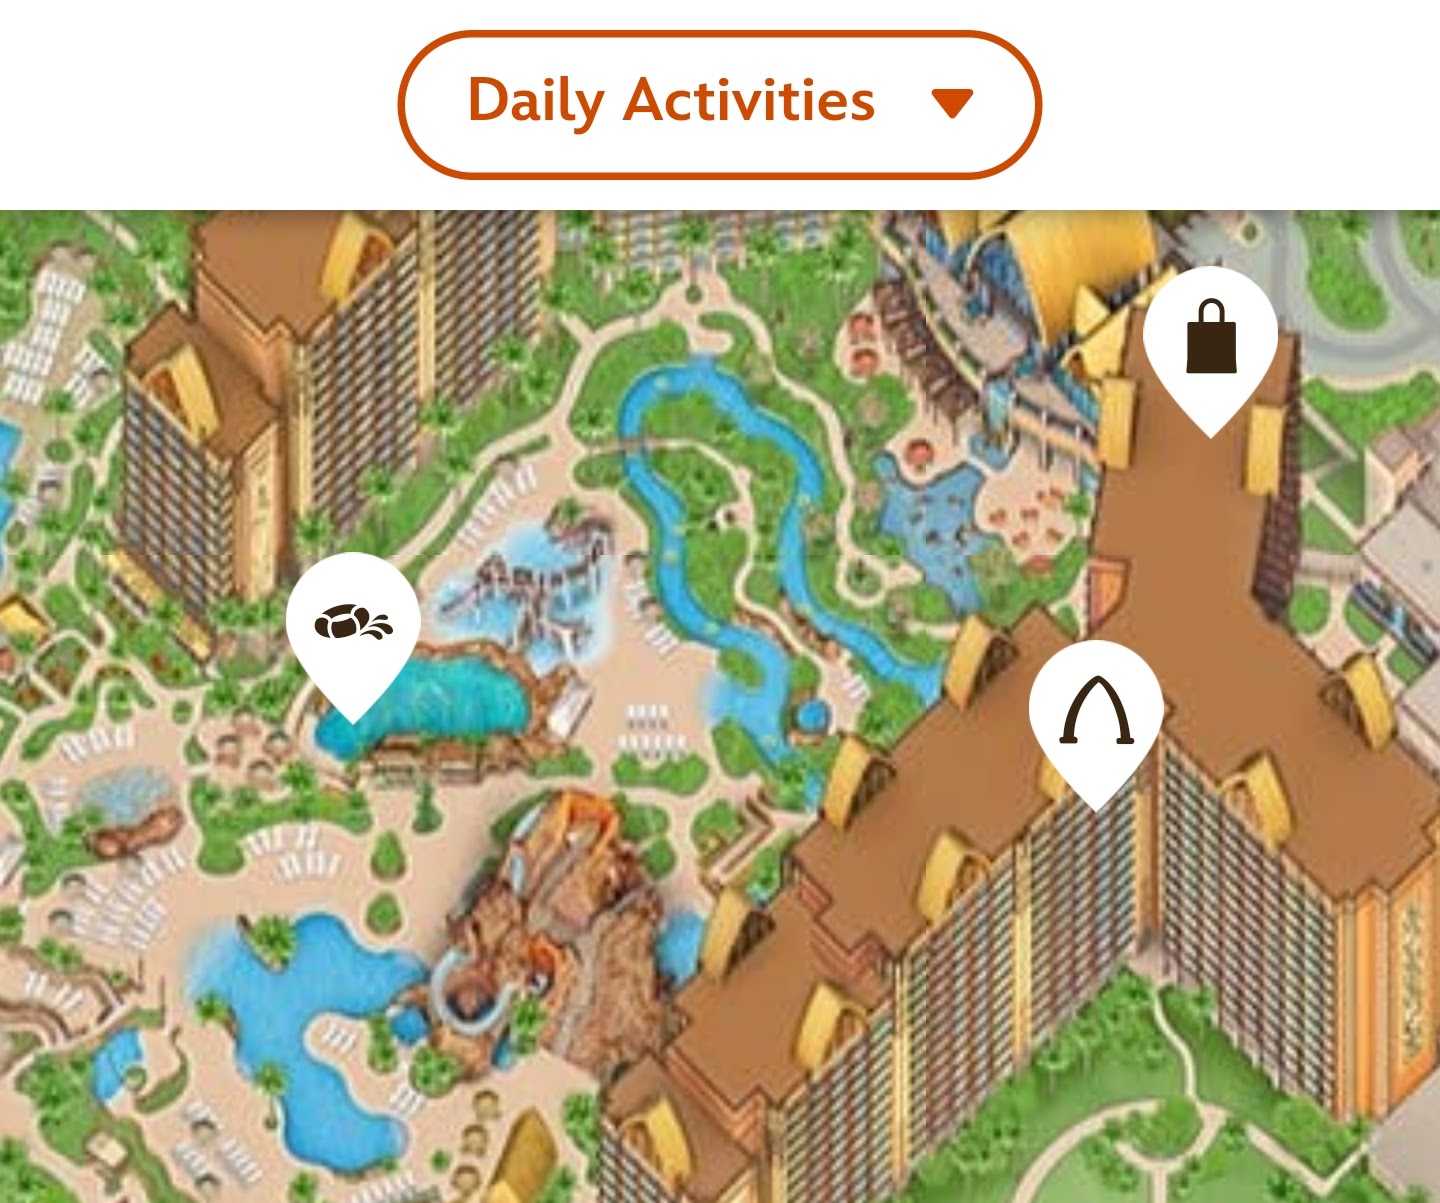 Daily Activities - Aulani Resort App